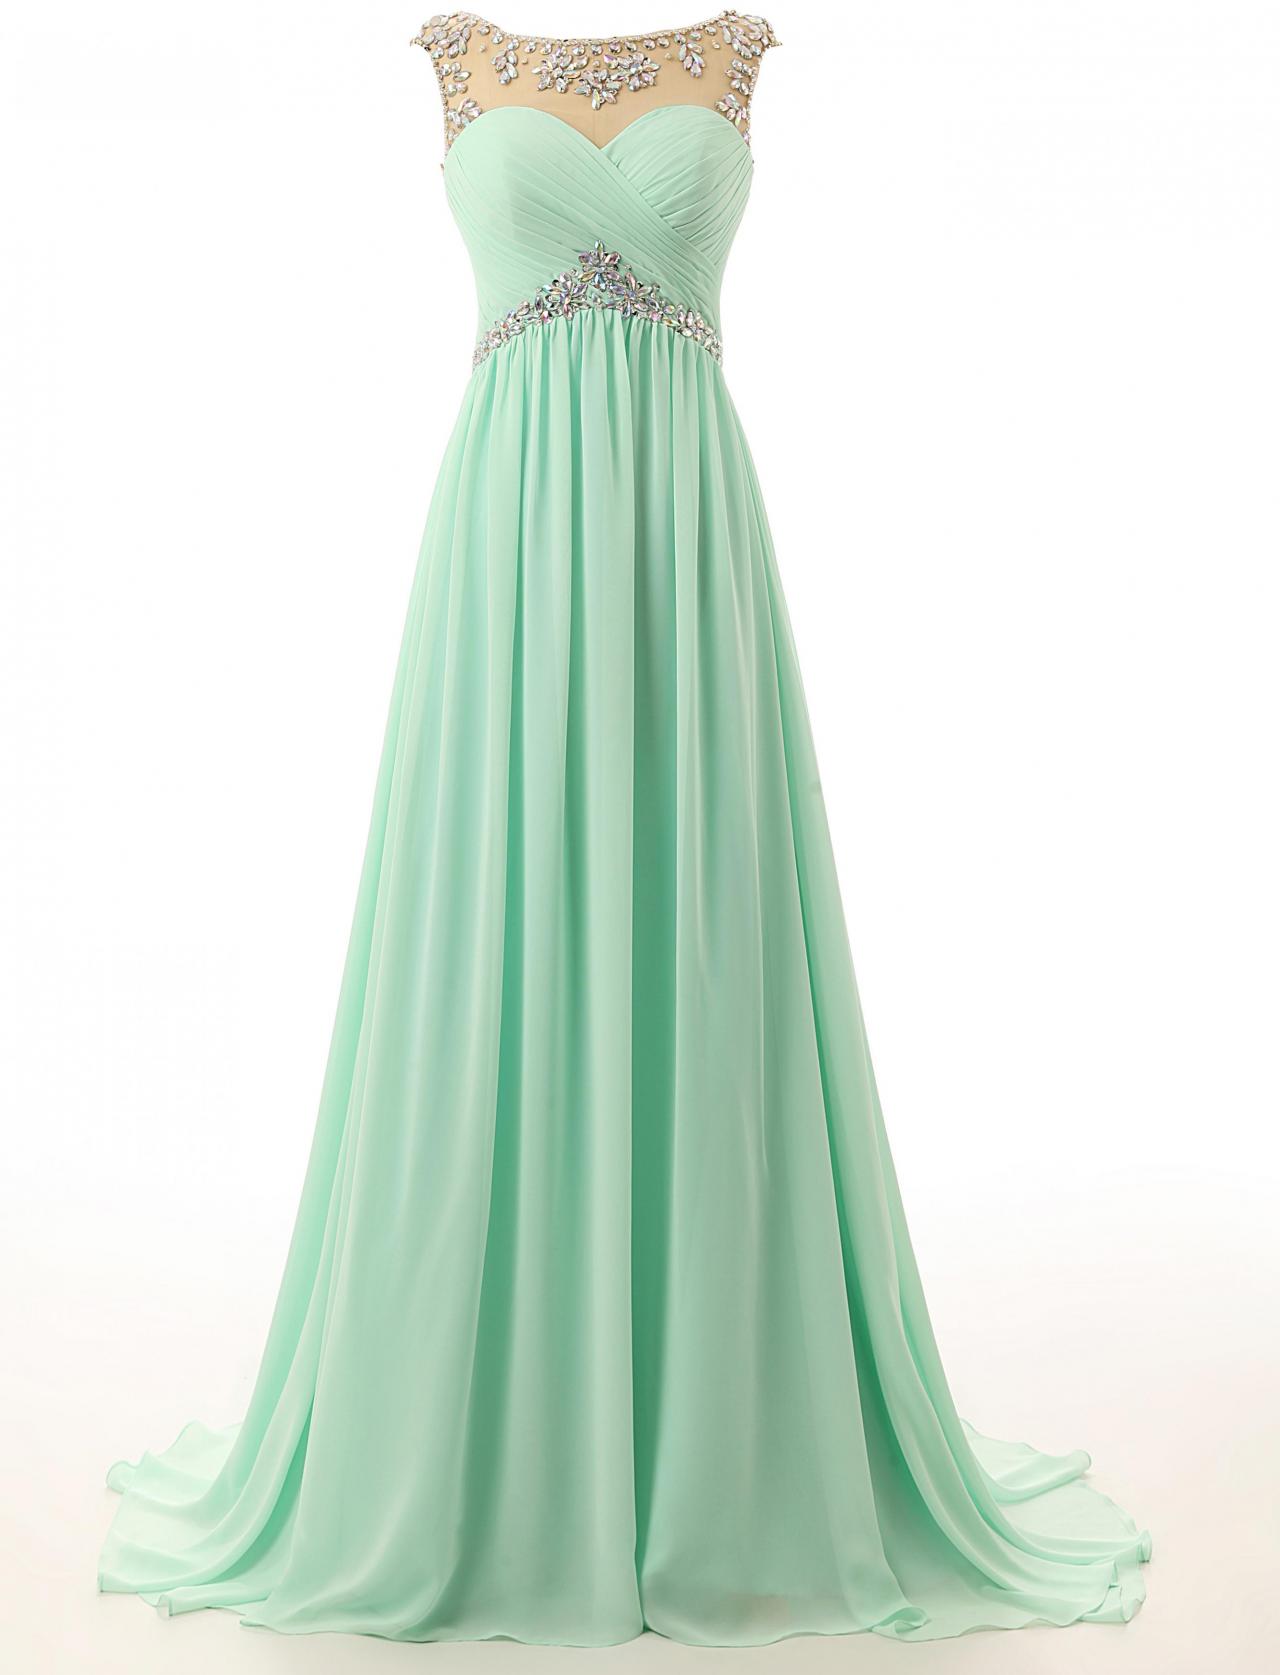 2017 Fashion Mint Green Prom Dresses,sexy Beading Chiffon Evening Dresses, Women Mint Dresses